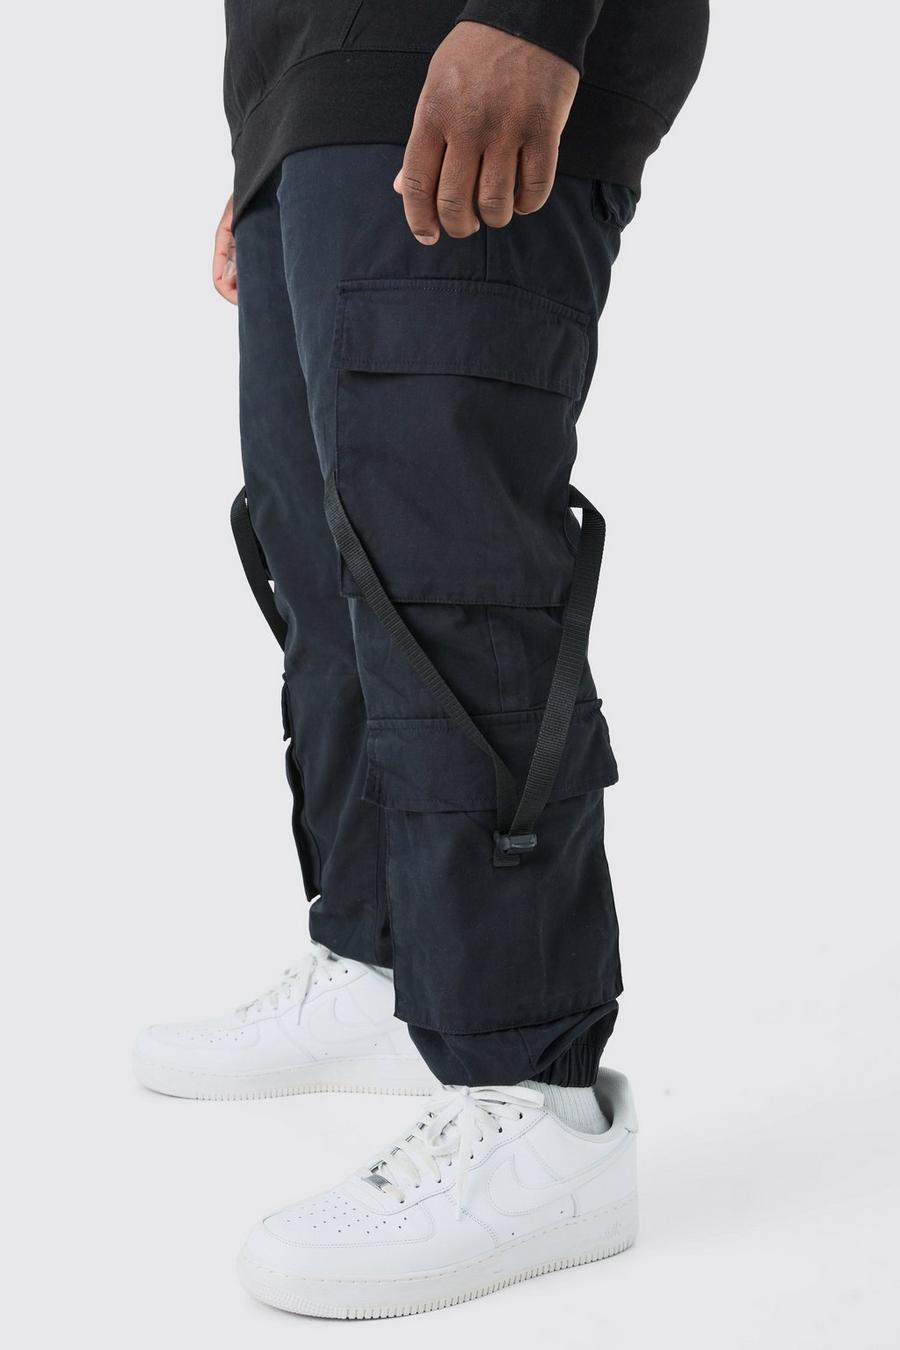 Pantaloni tuta Plus Size stile Cargo con spalline intessute, Black